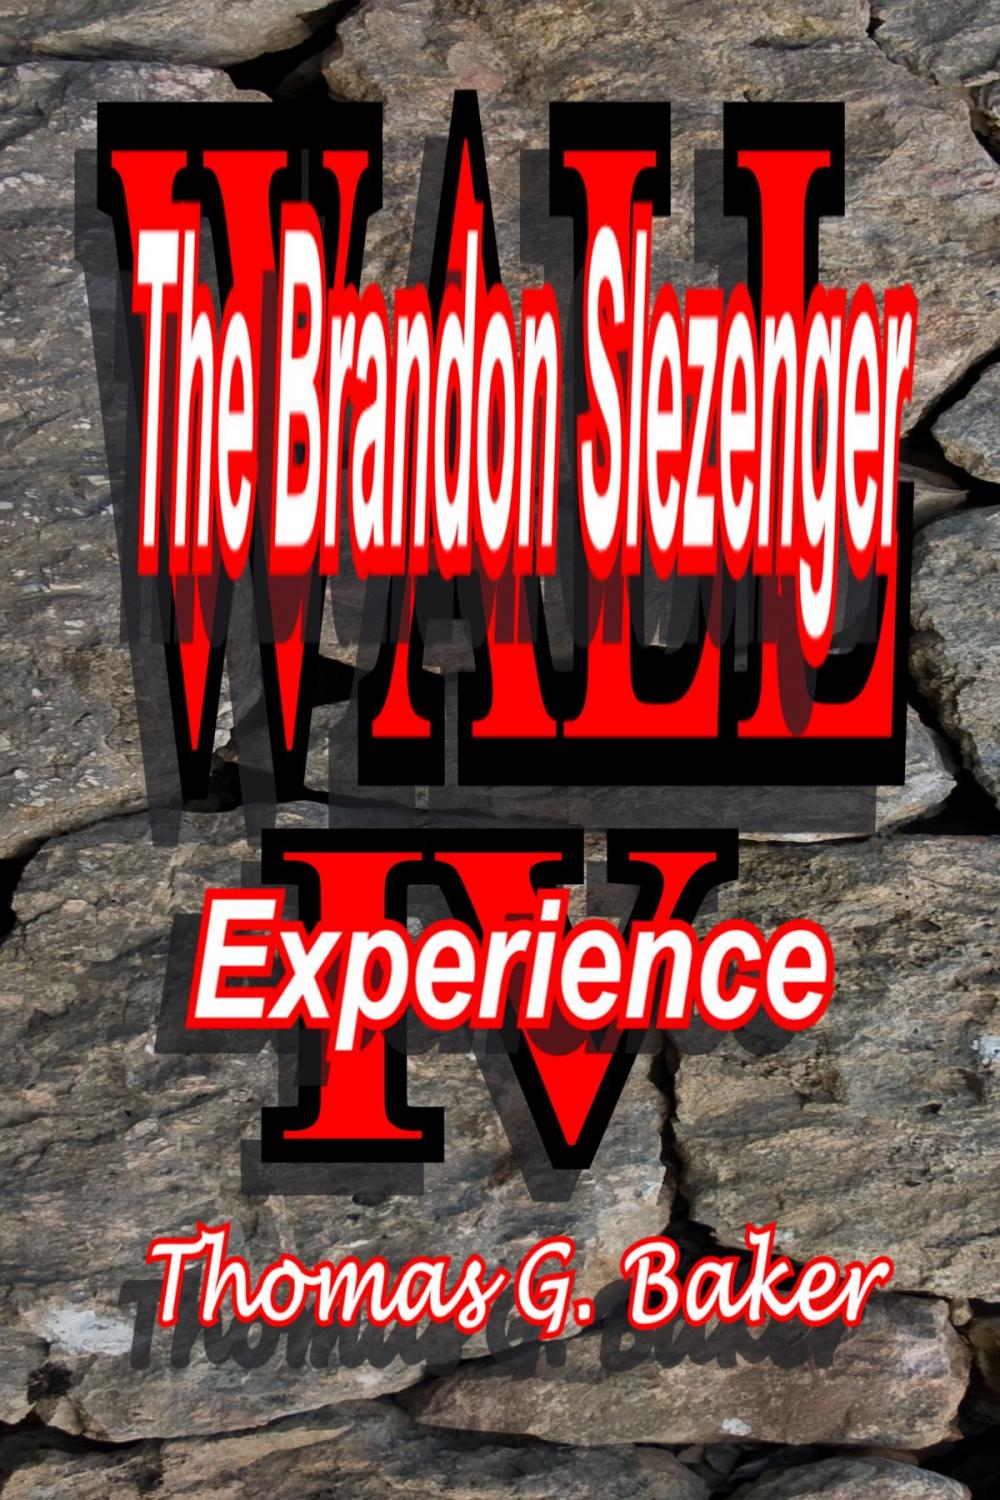 Big bigCover of Wall IV The Brandon Slazenger Experience